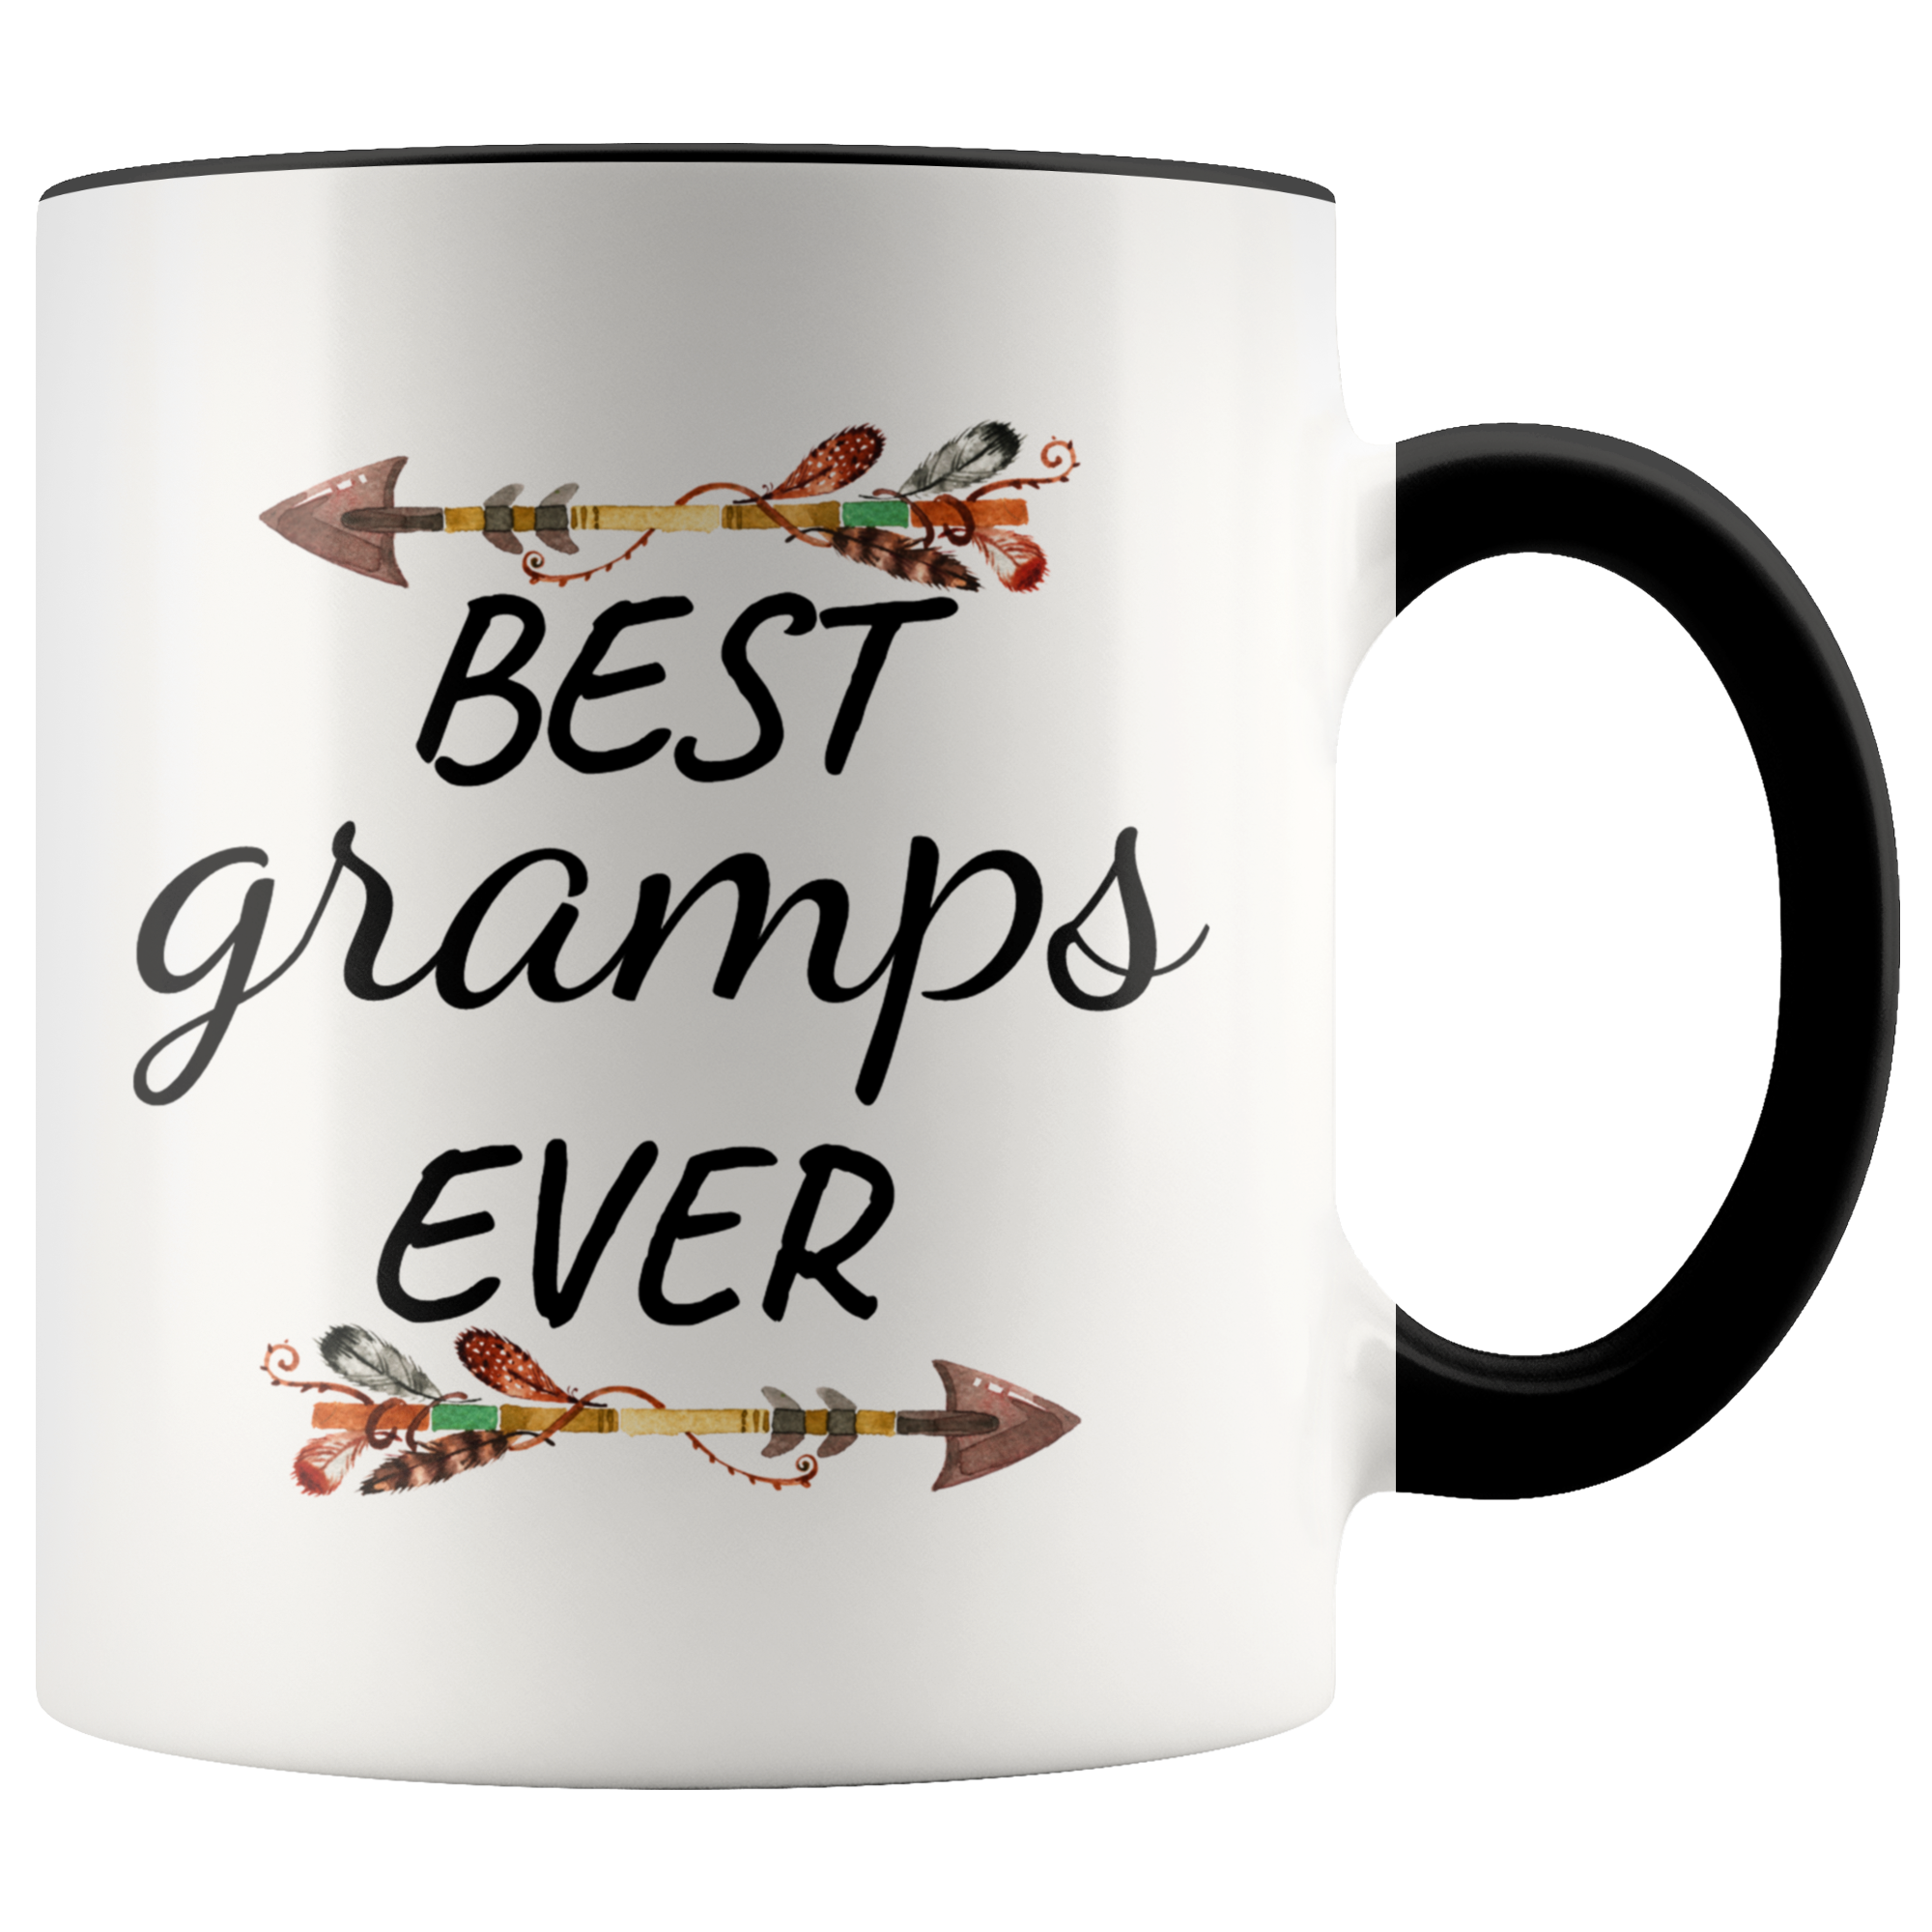 Best Gramps Mug